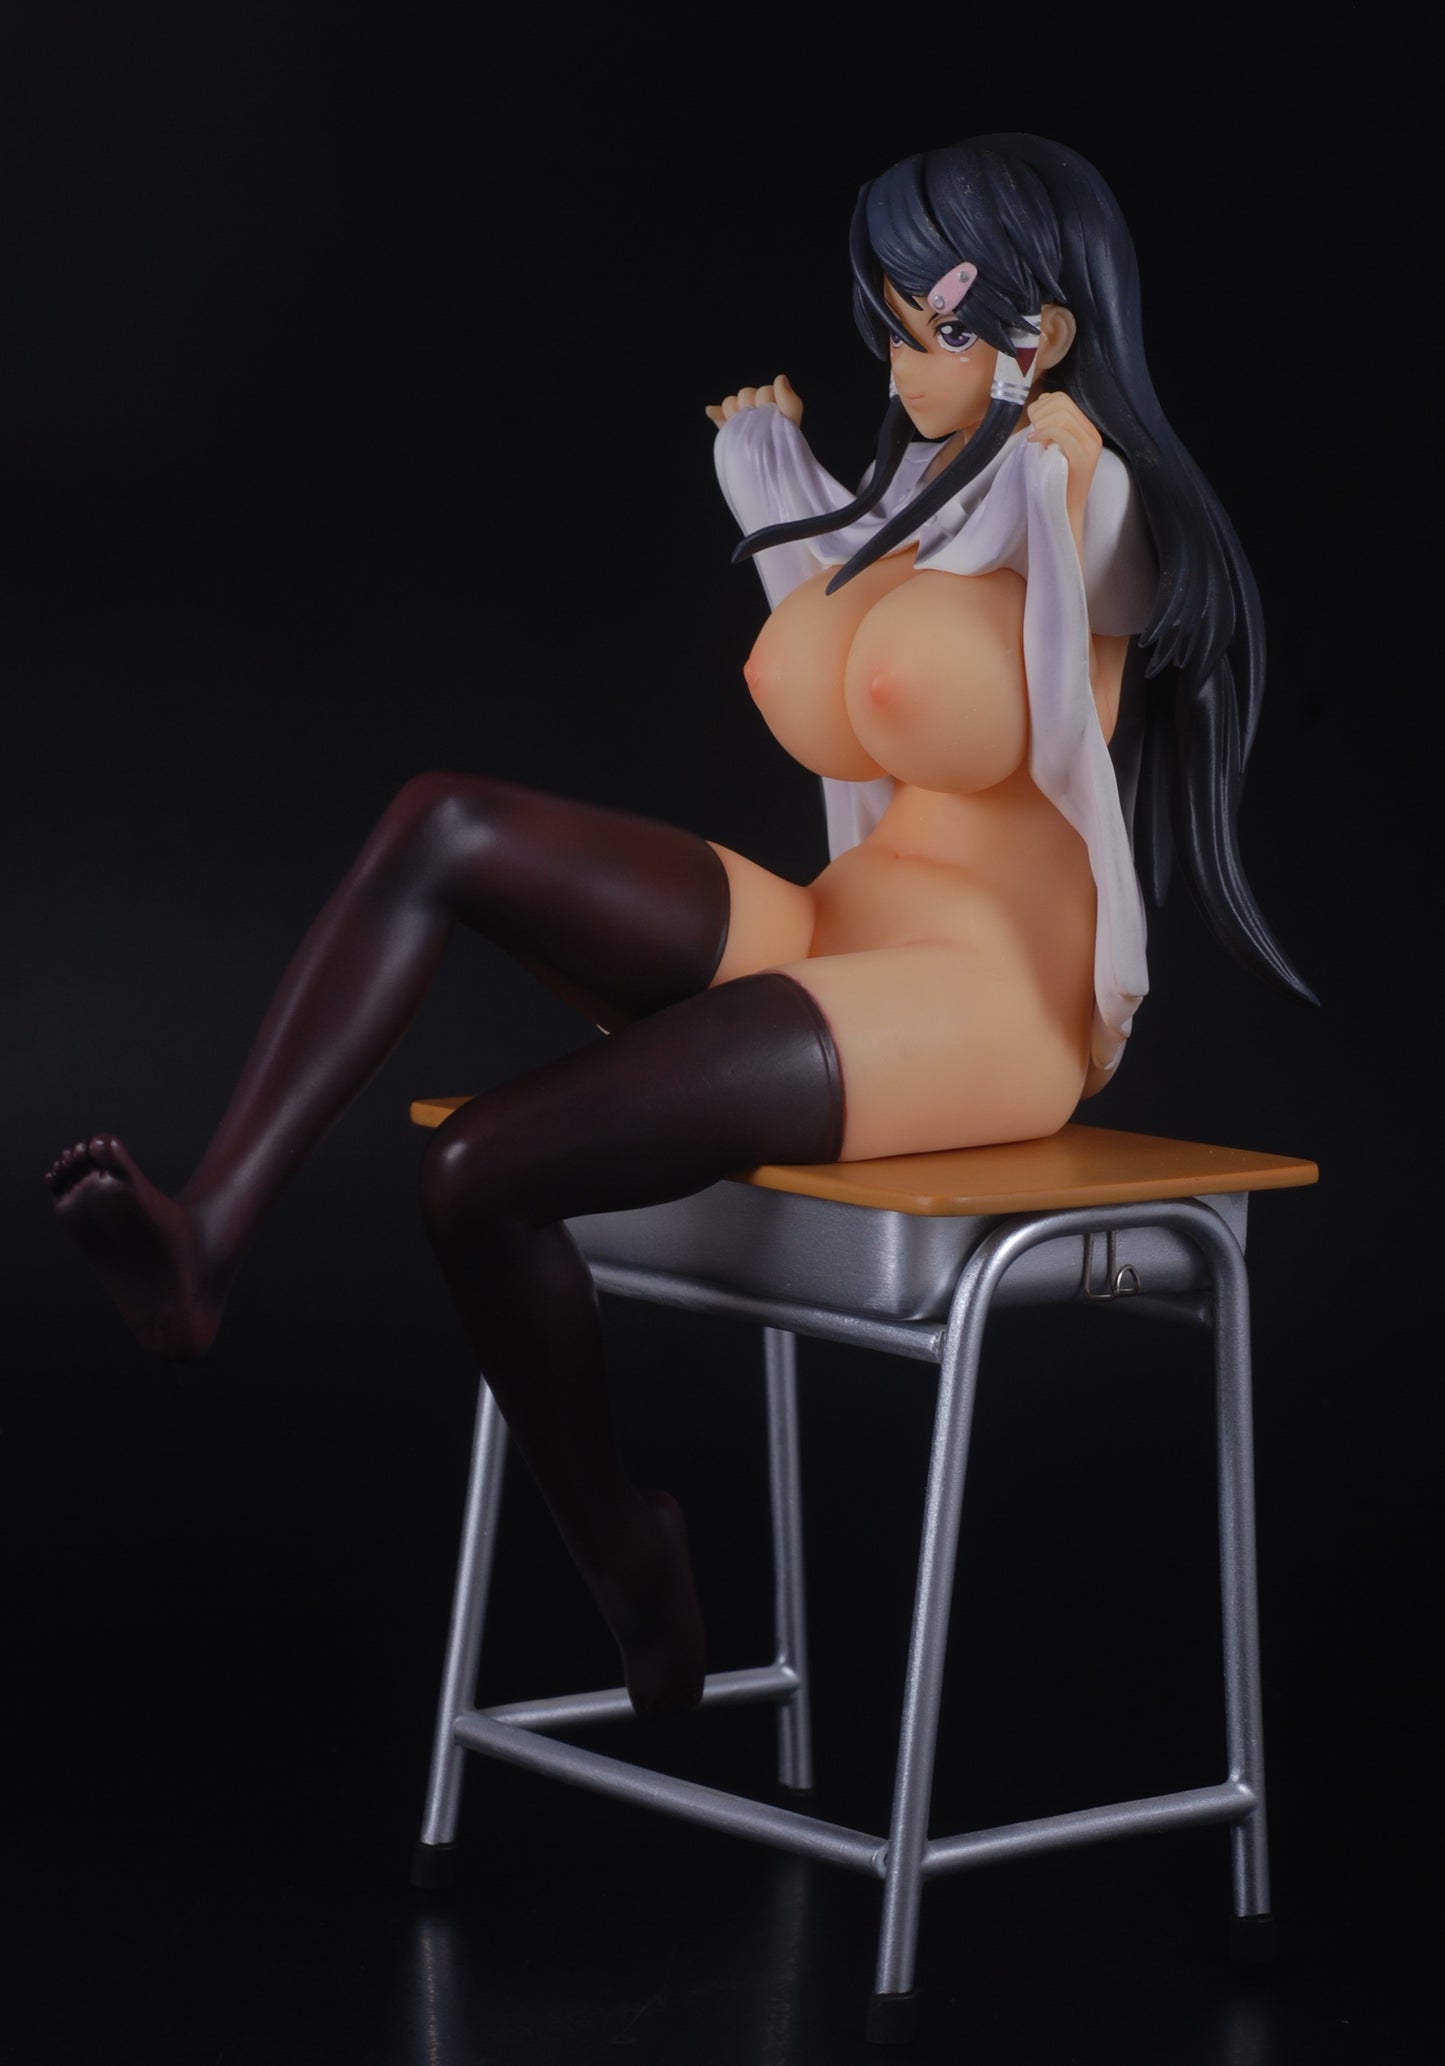 Hentai Figure - HHH Triple Ecchi / Takashima Shigure 1/6 naked anime figure sexy anime girl figure